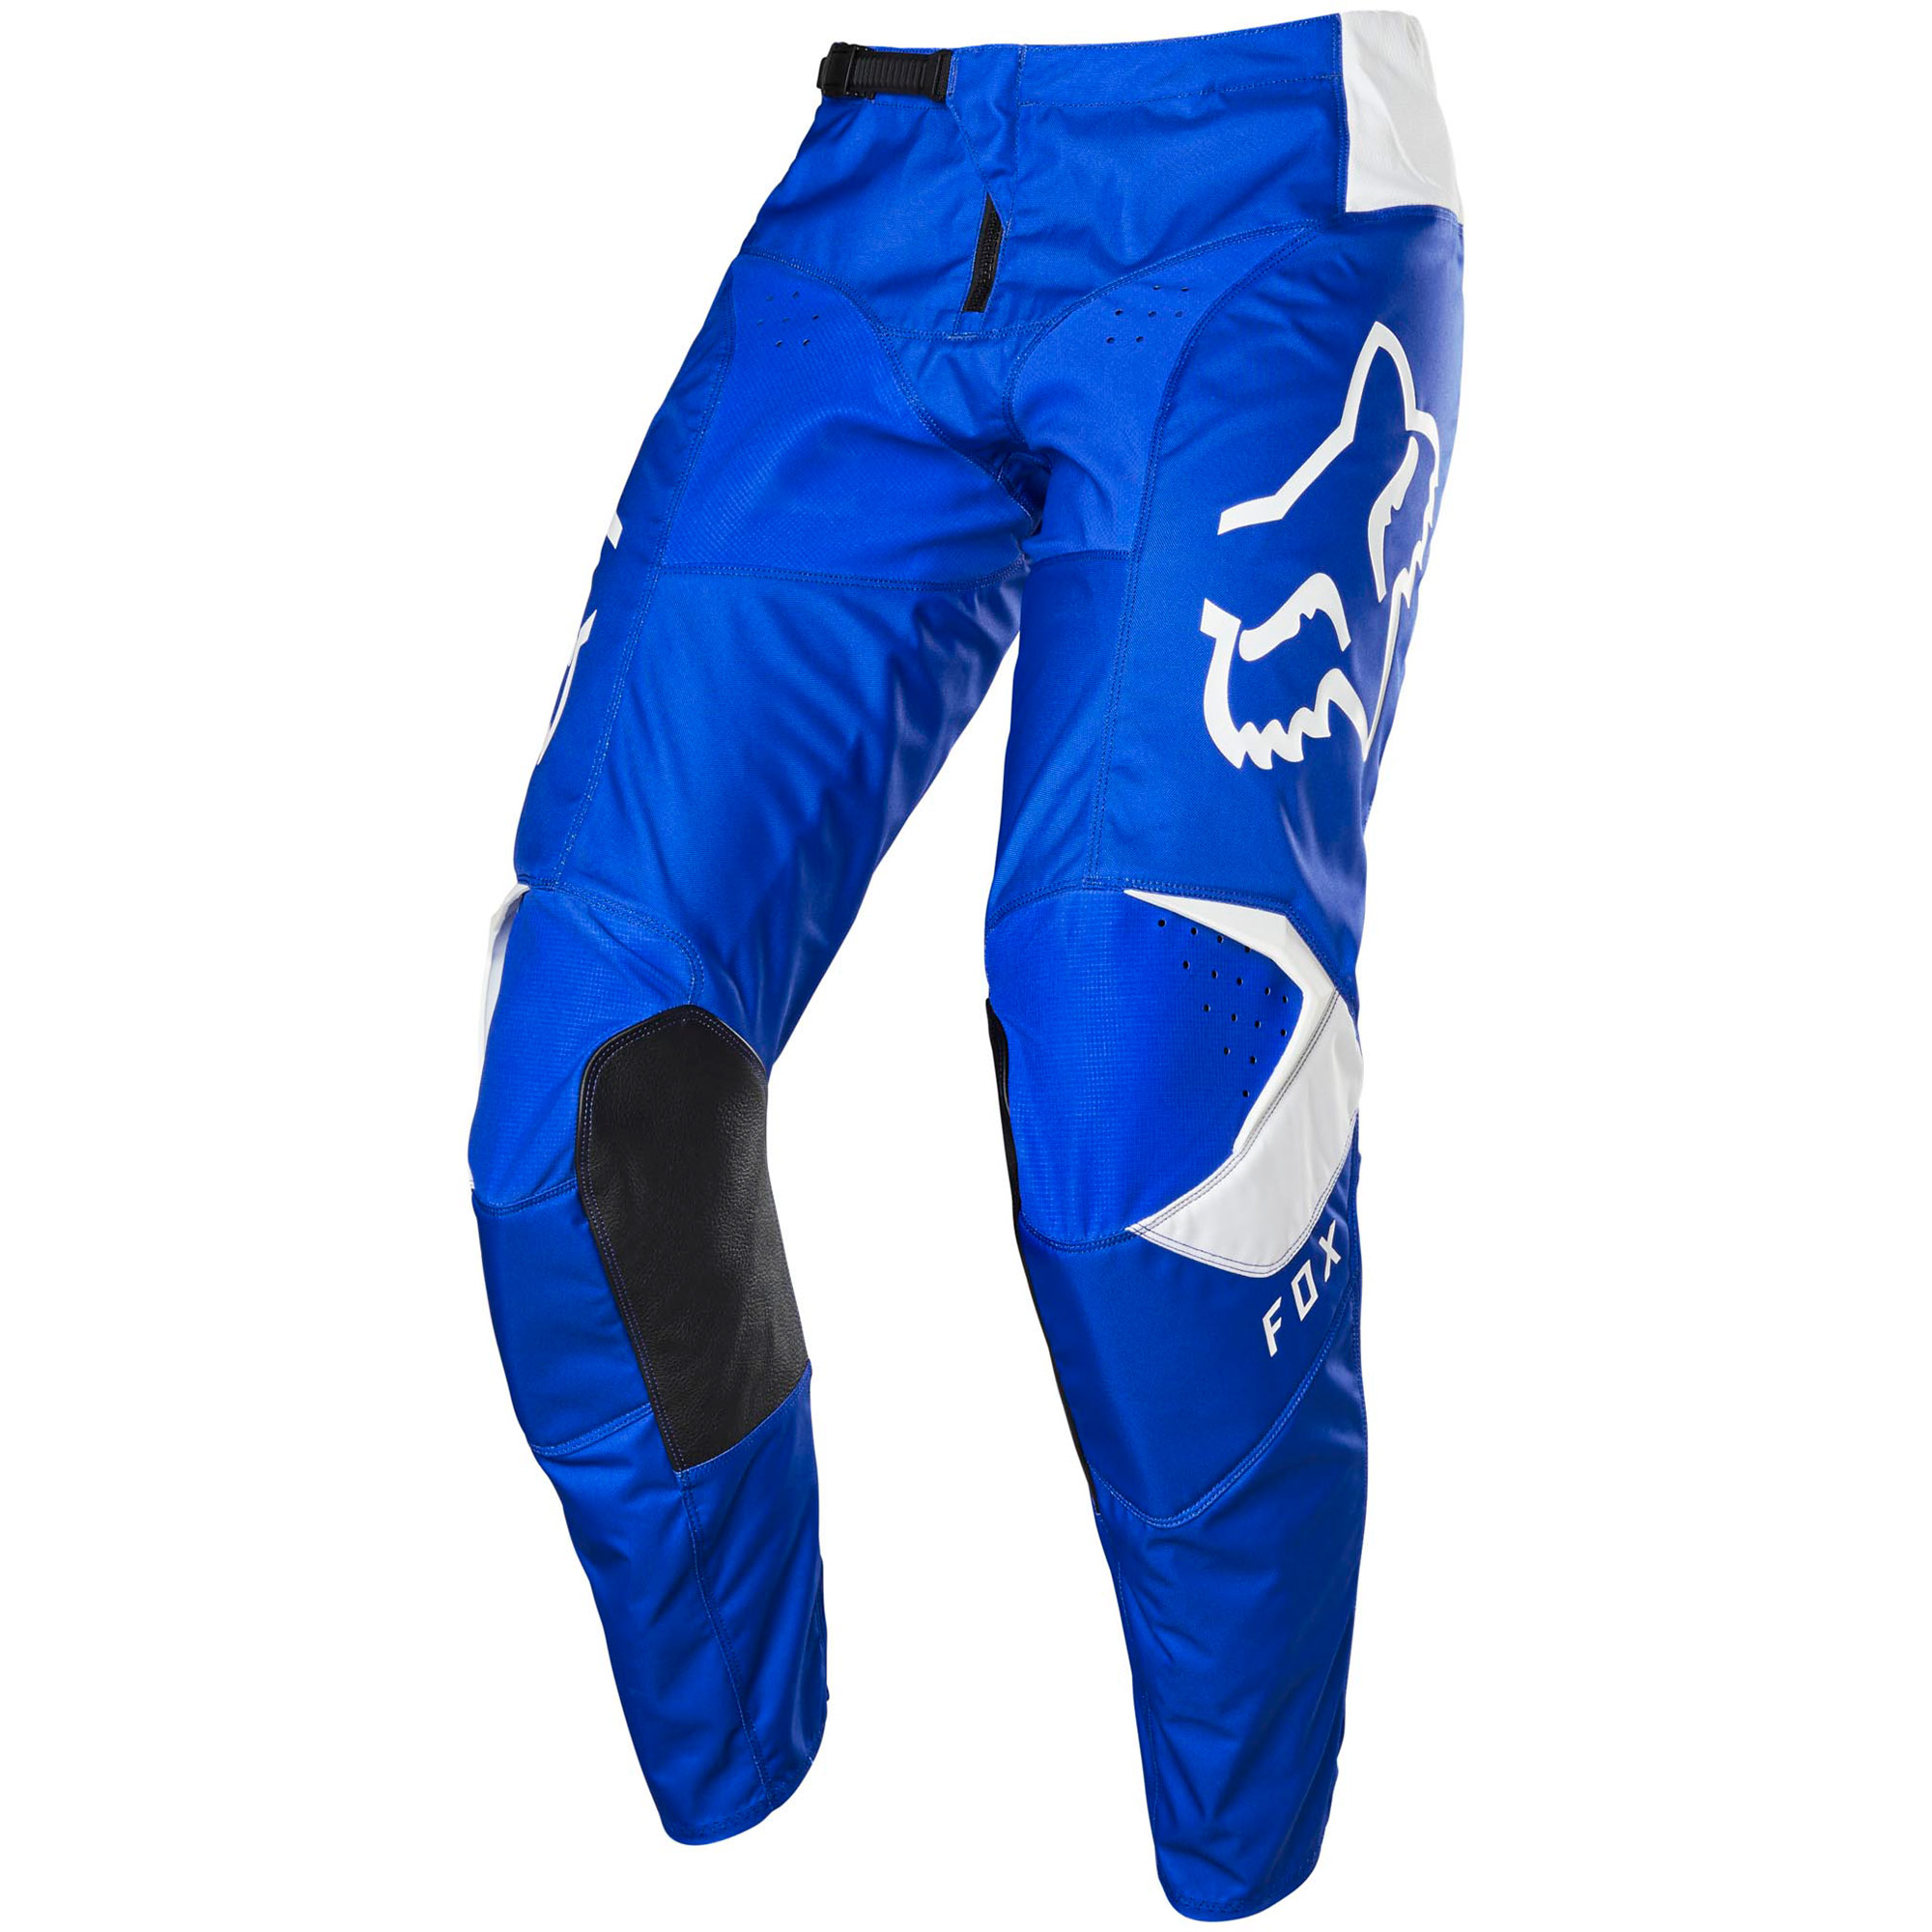 Fox Clothing 180 Prix Motocross MX Off Road Riding Pants Trousers | eBay